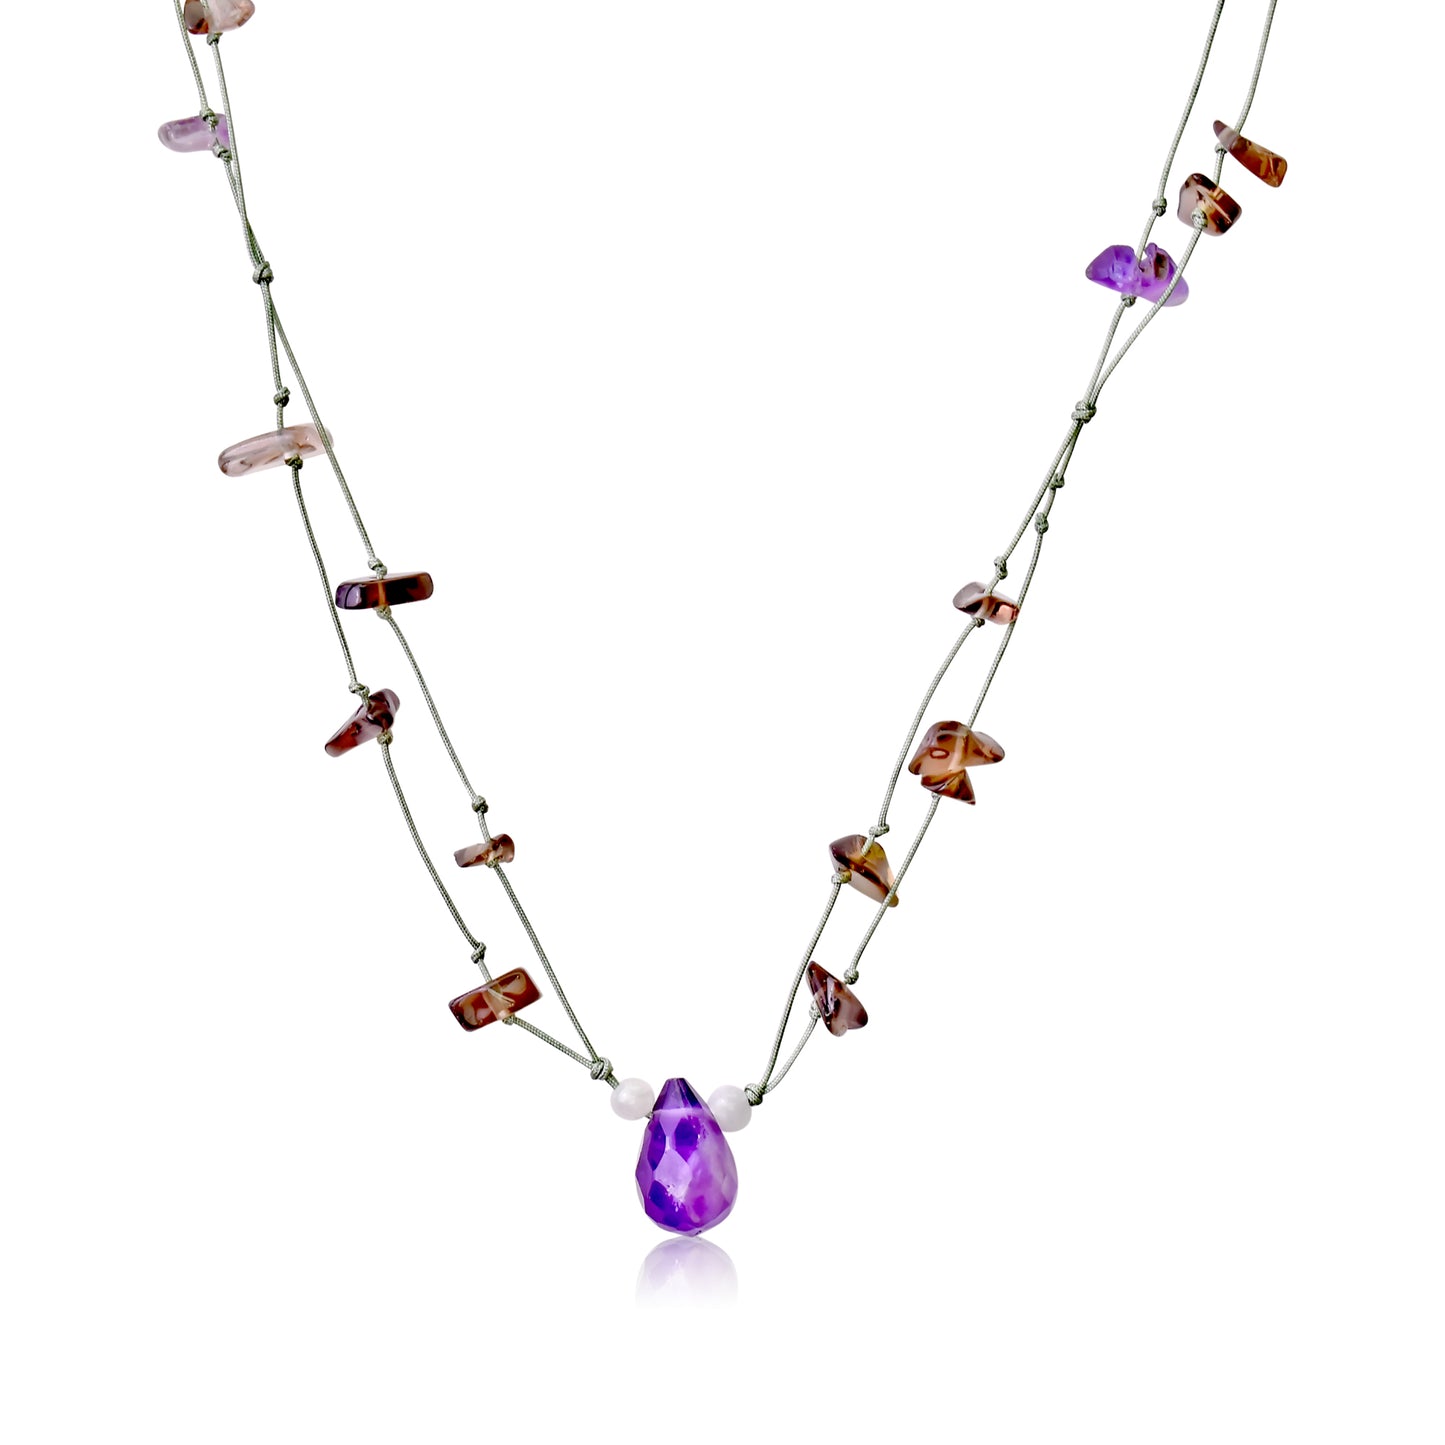 Subtle and Mystical Teardrop-Shaped Amethyst Gemstone Necklace Pendant